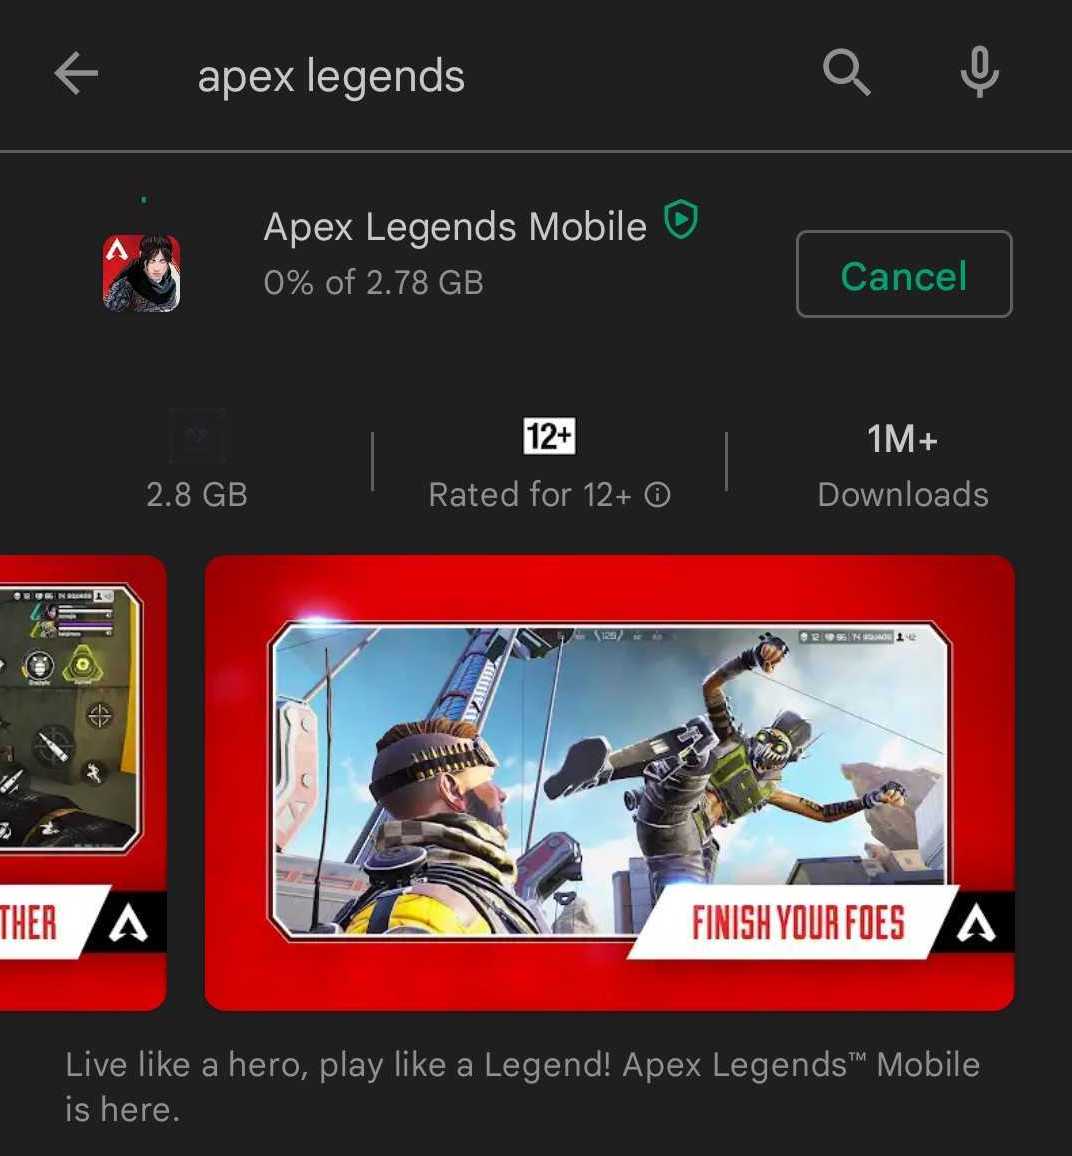 Apex legends mobile full size